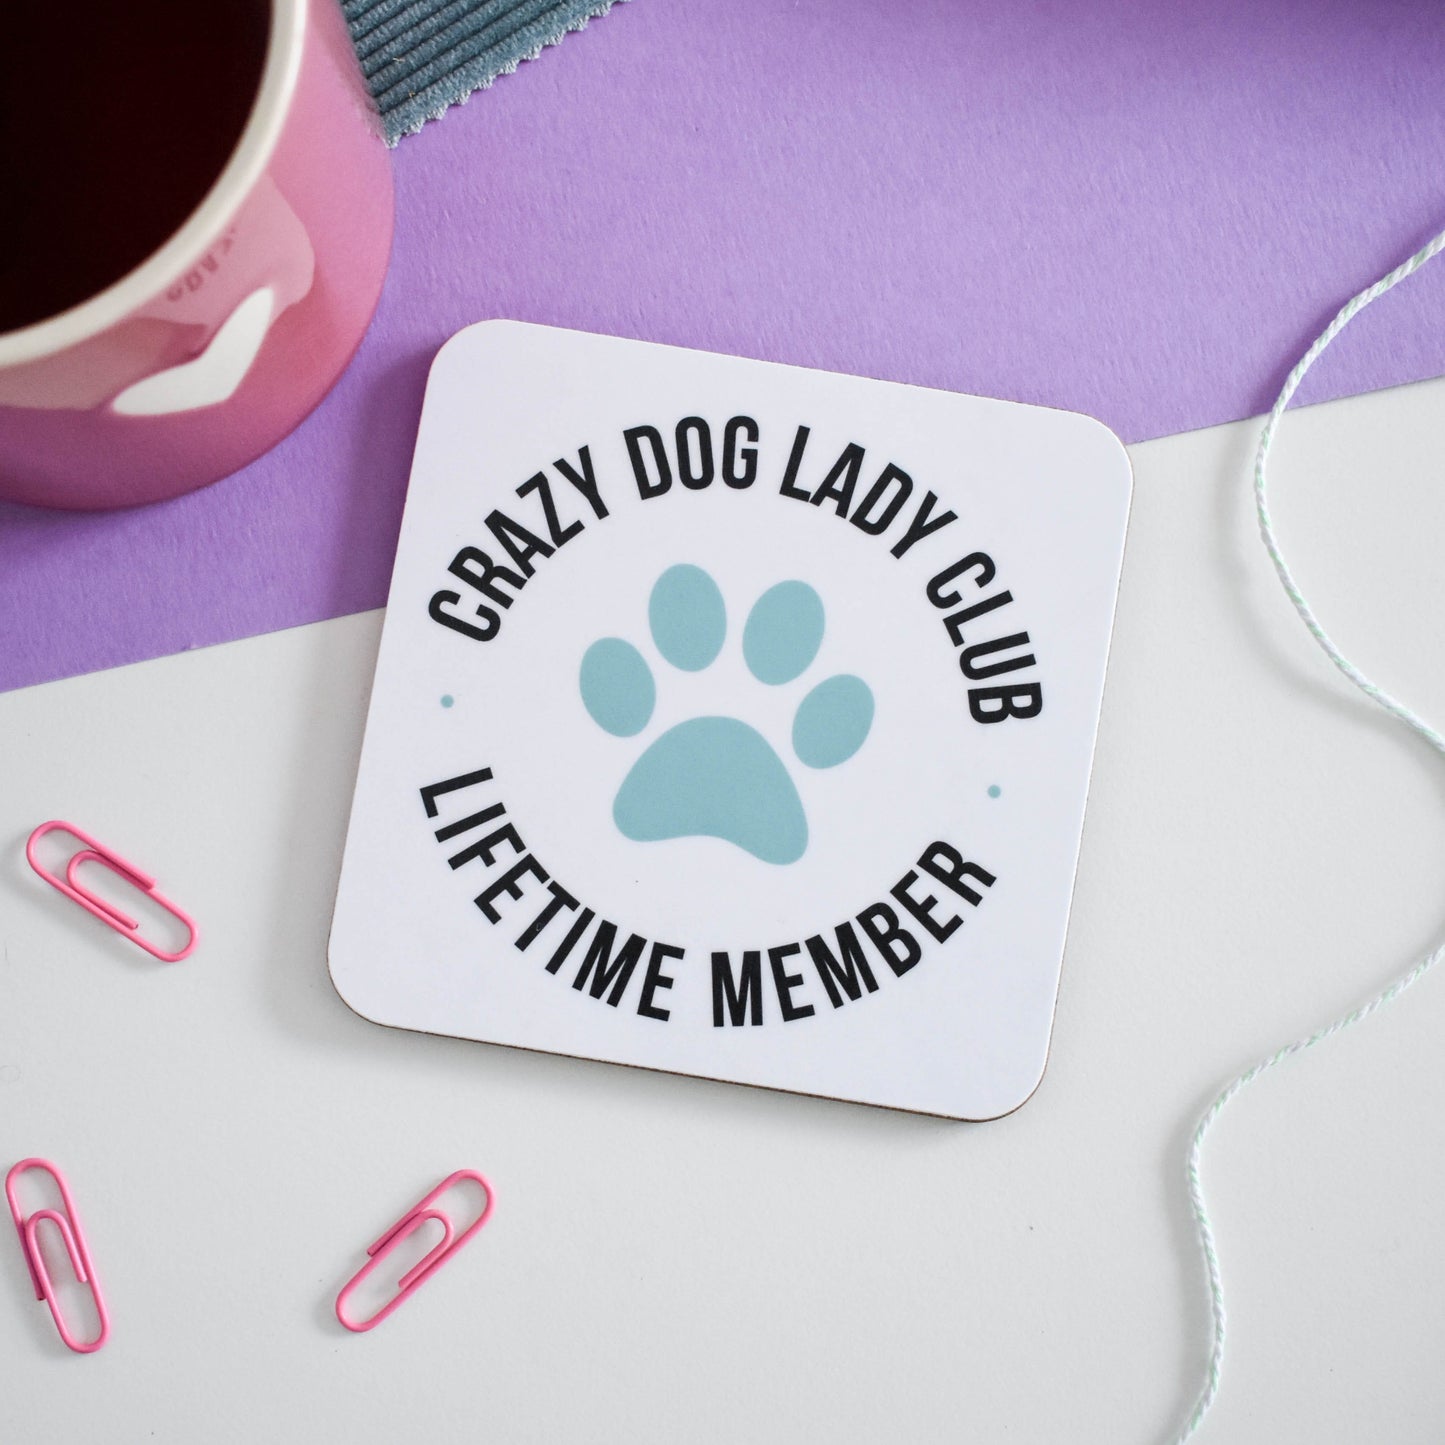 Crazy dog lady club coaster from Purple Tree Designs